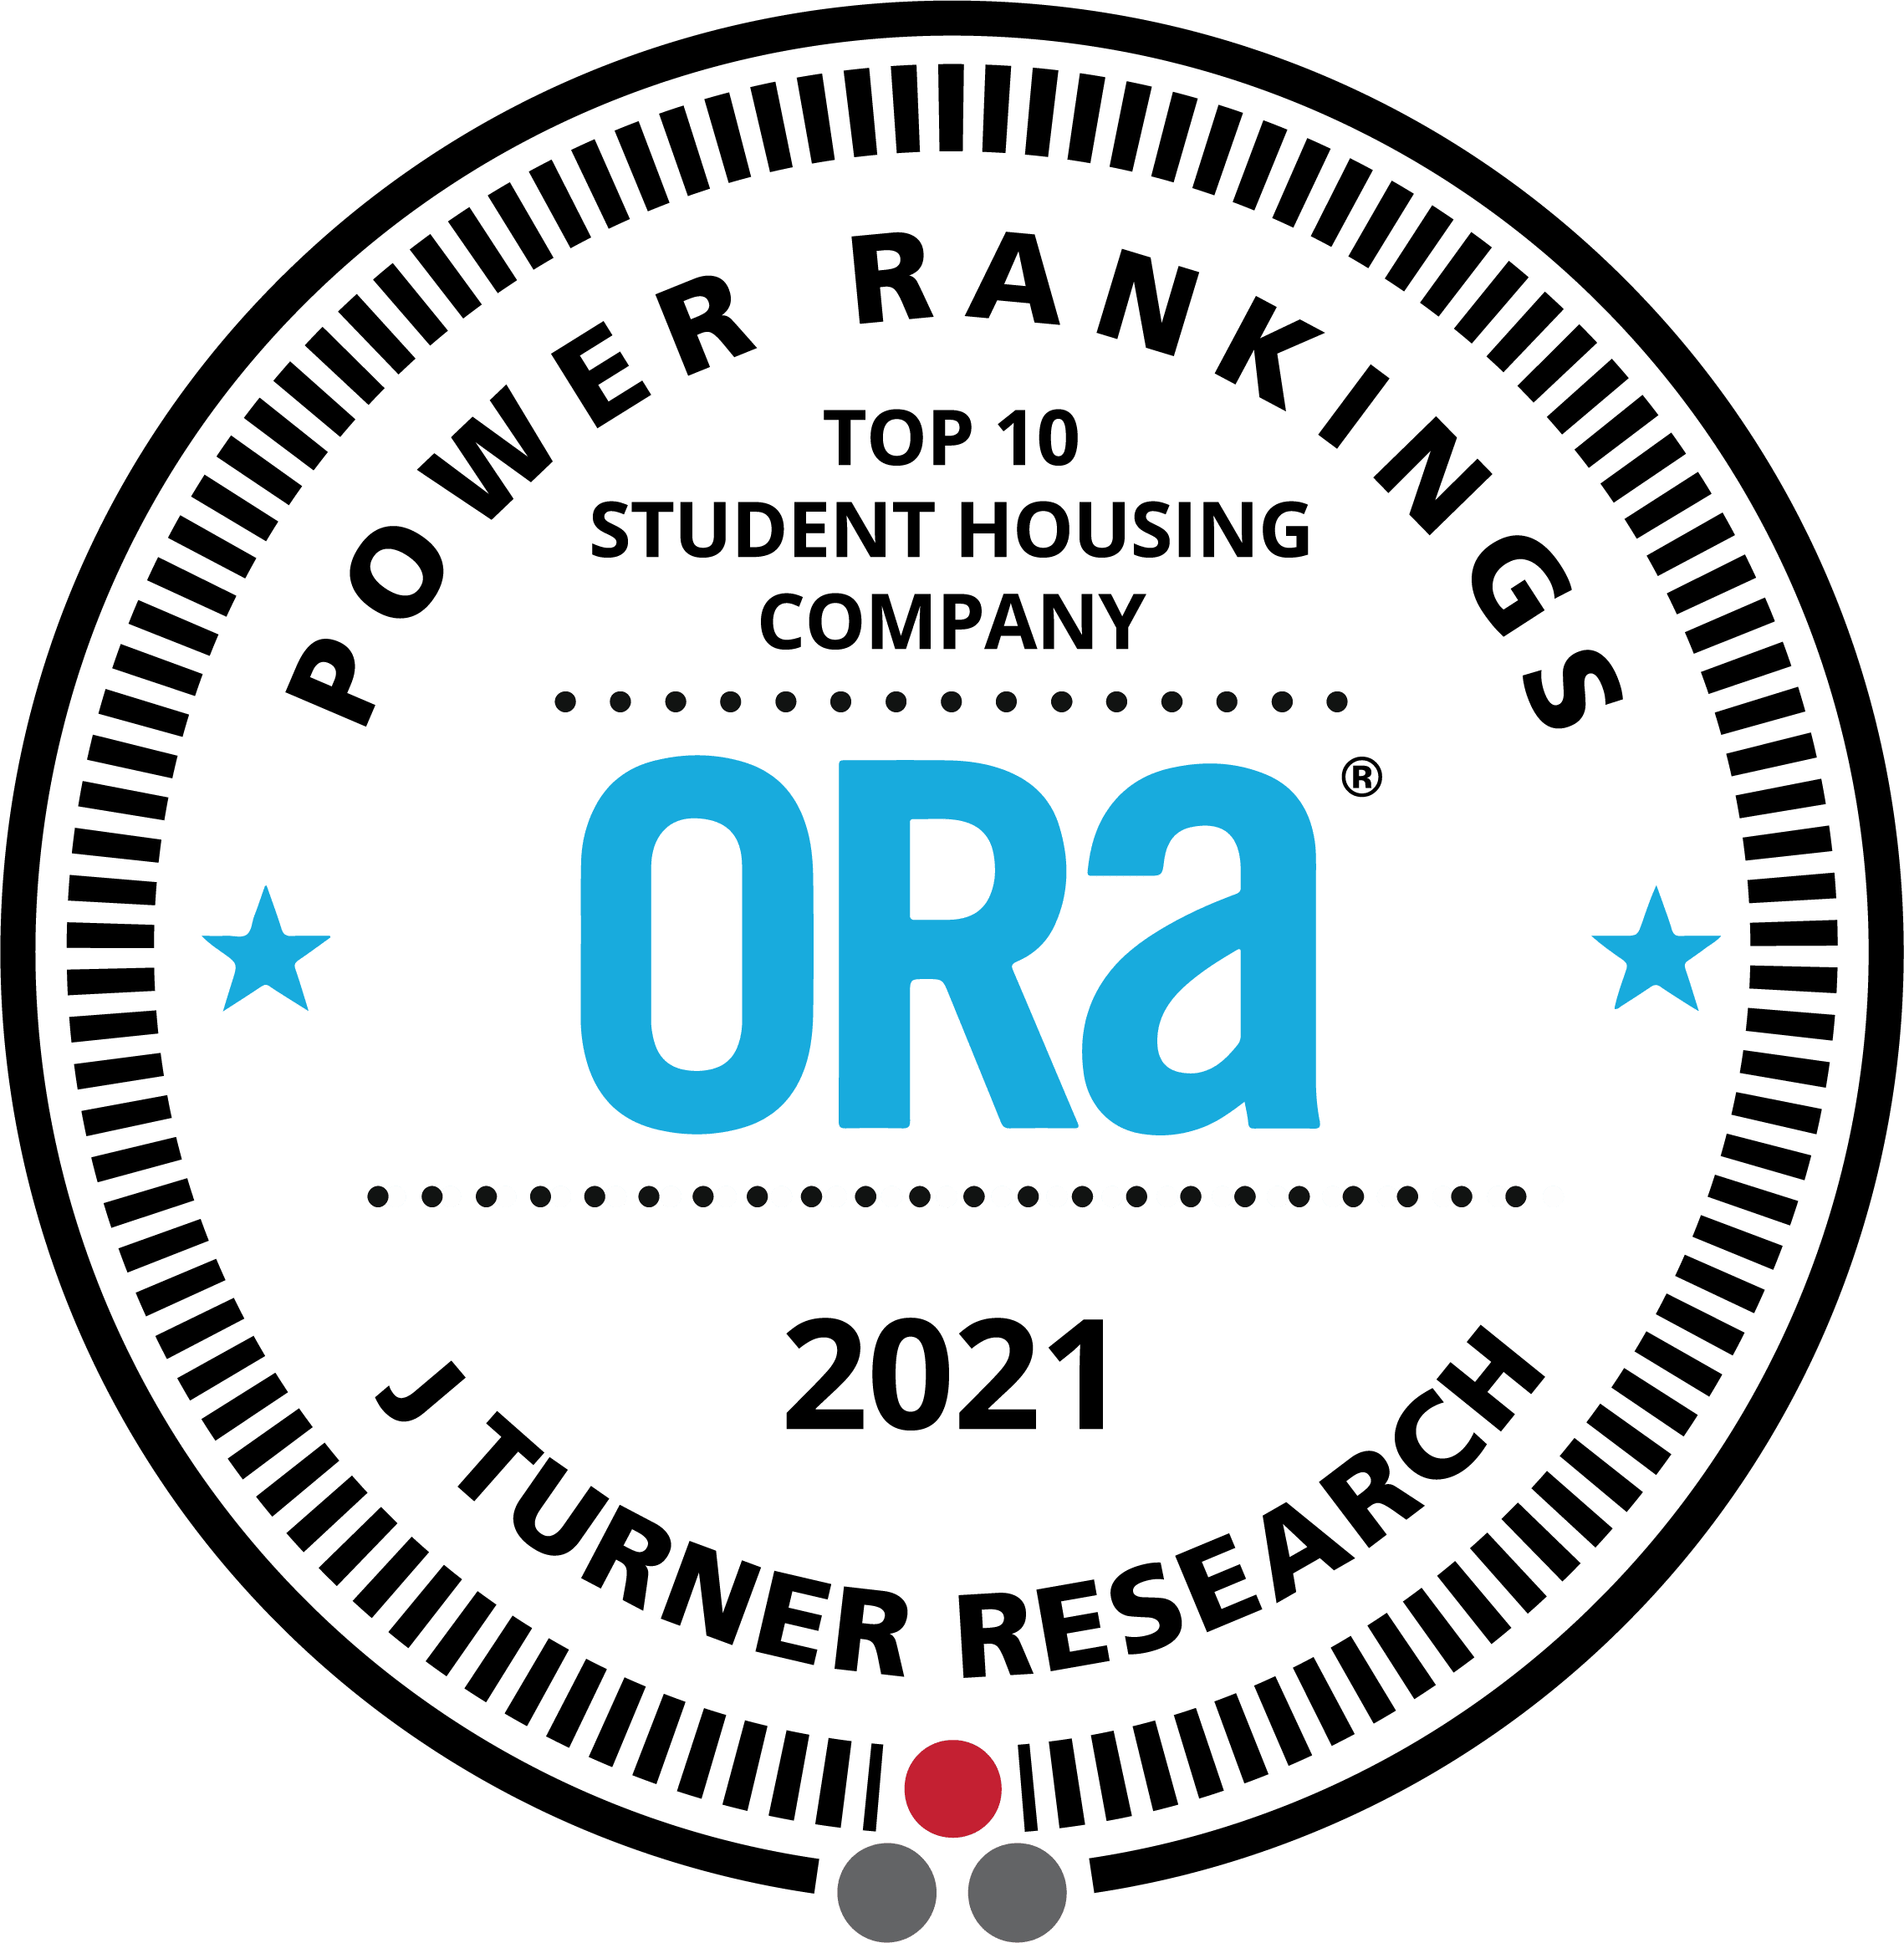 Top 10 student housing company award logo